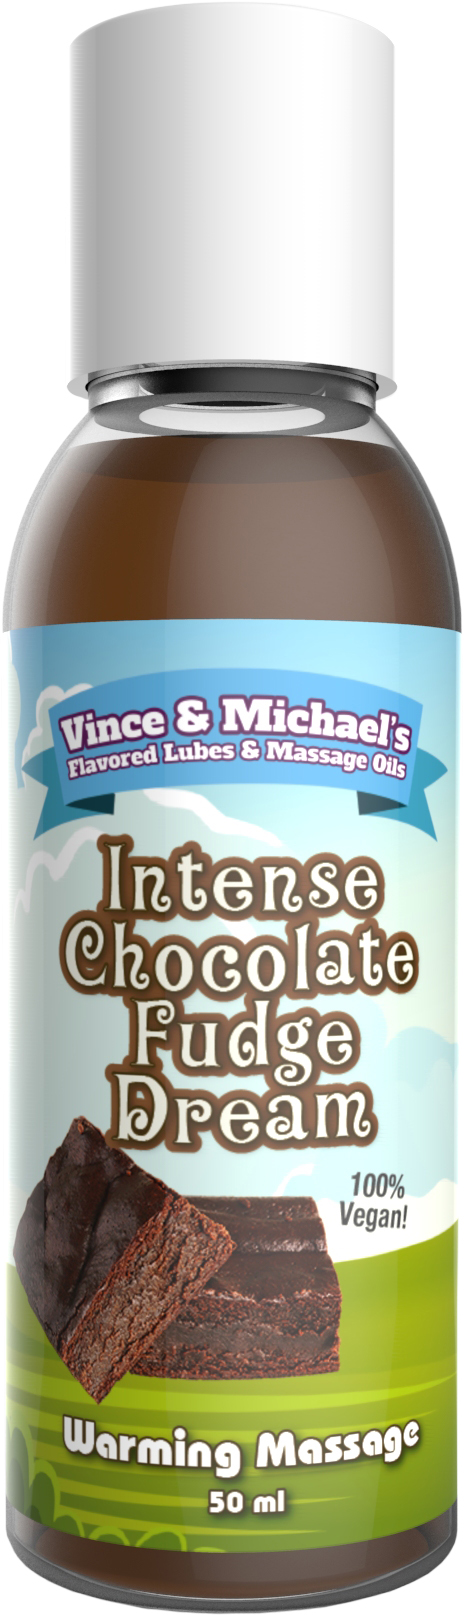 VINCE & MICHAEL's Warming Intense Chocolate Fudge Dream 50ml